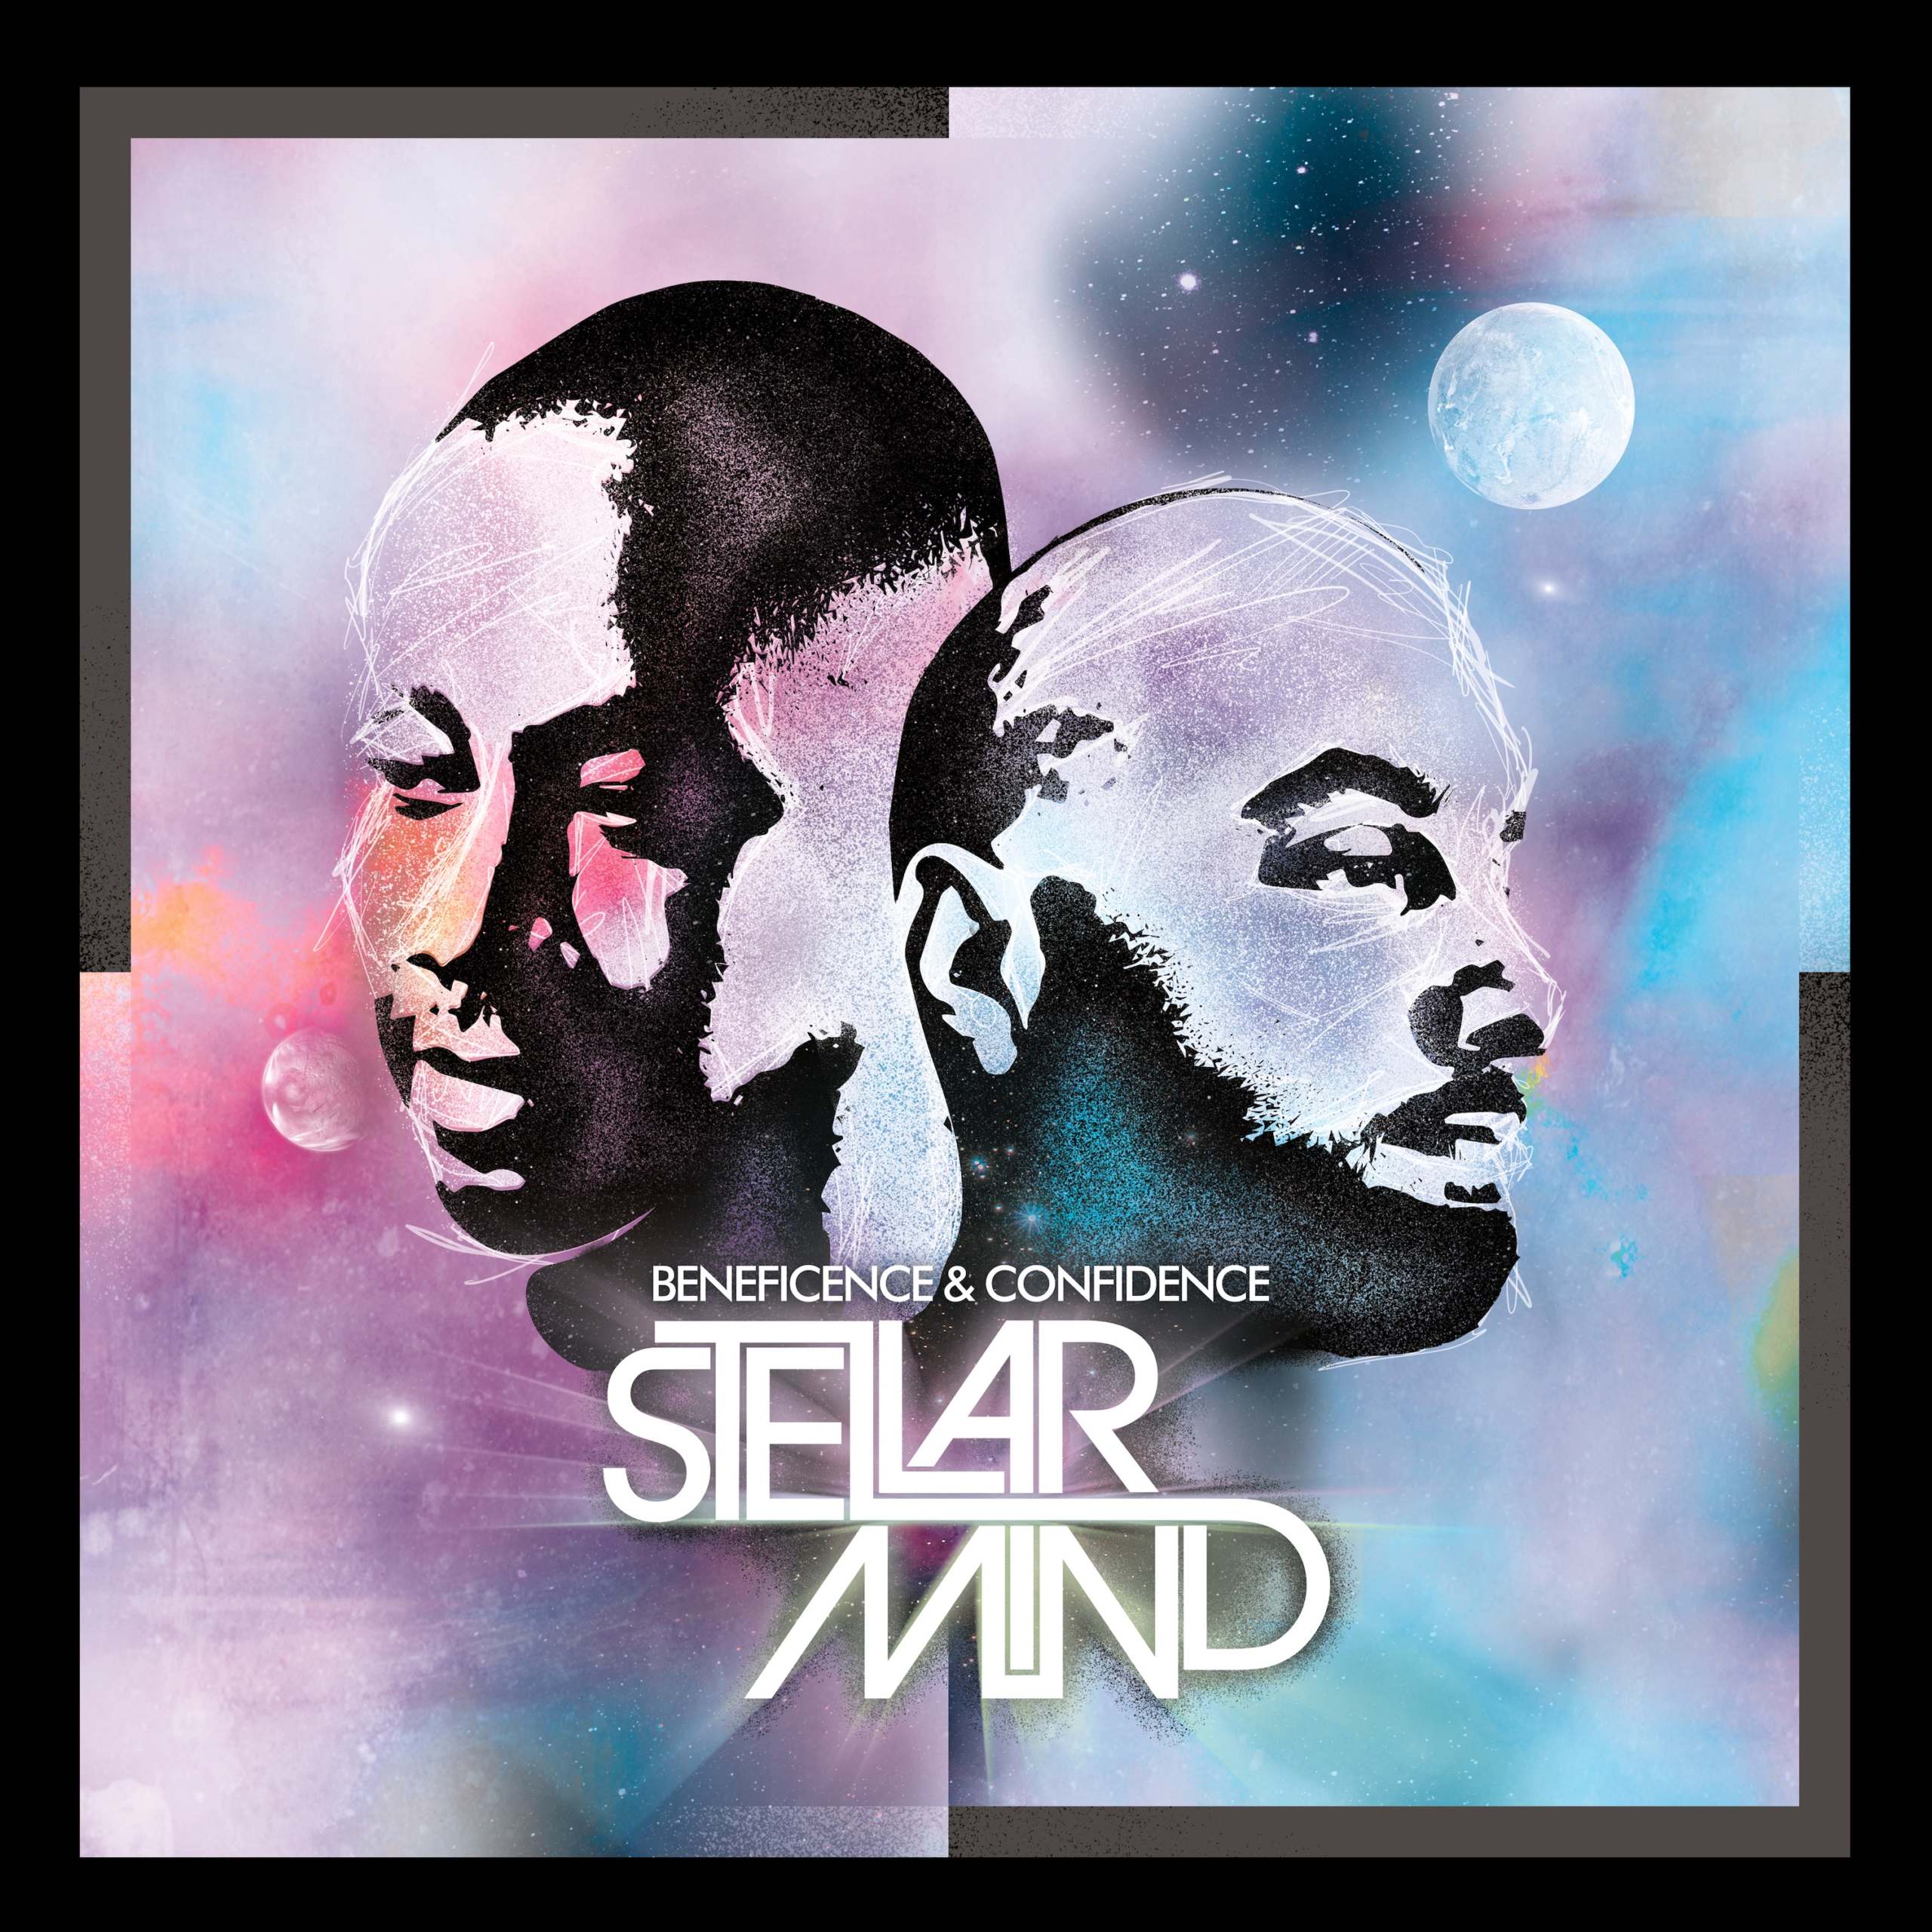 Beneficence & Confidence Drop ‘Stellar Mind’ Album + ‘Jerz To The Jugular’ Video feat. El Da Sensei